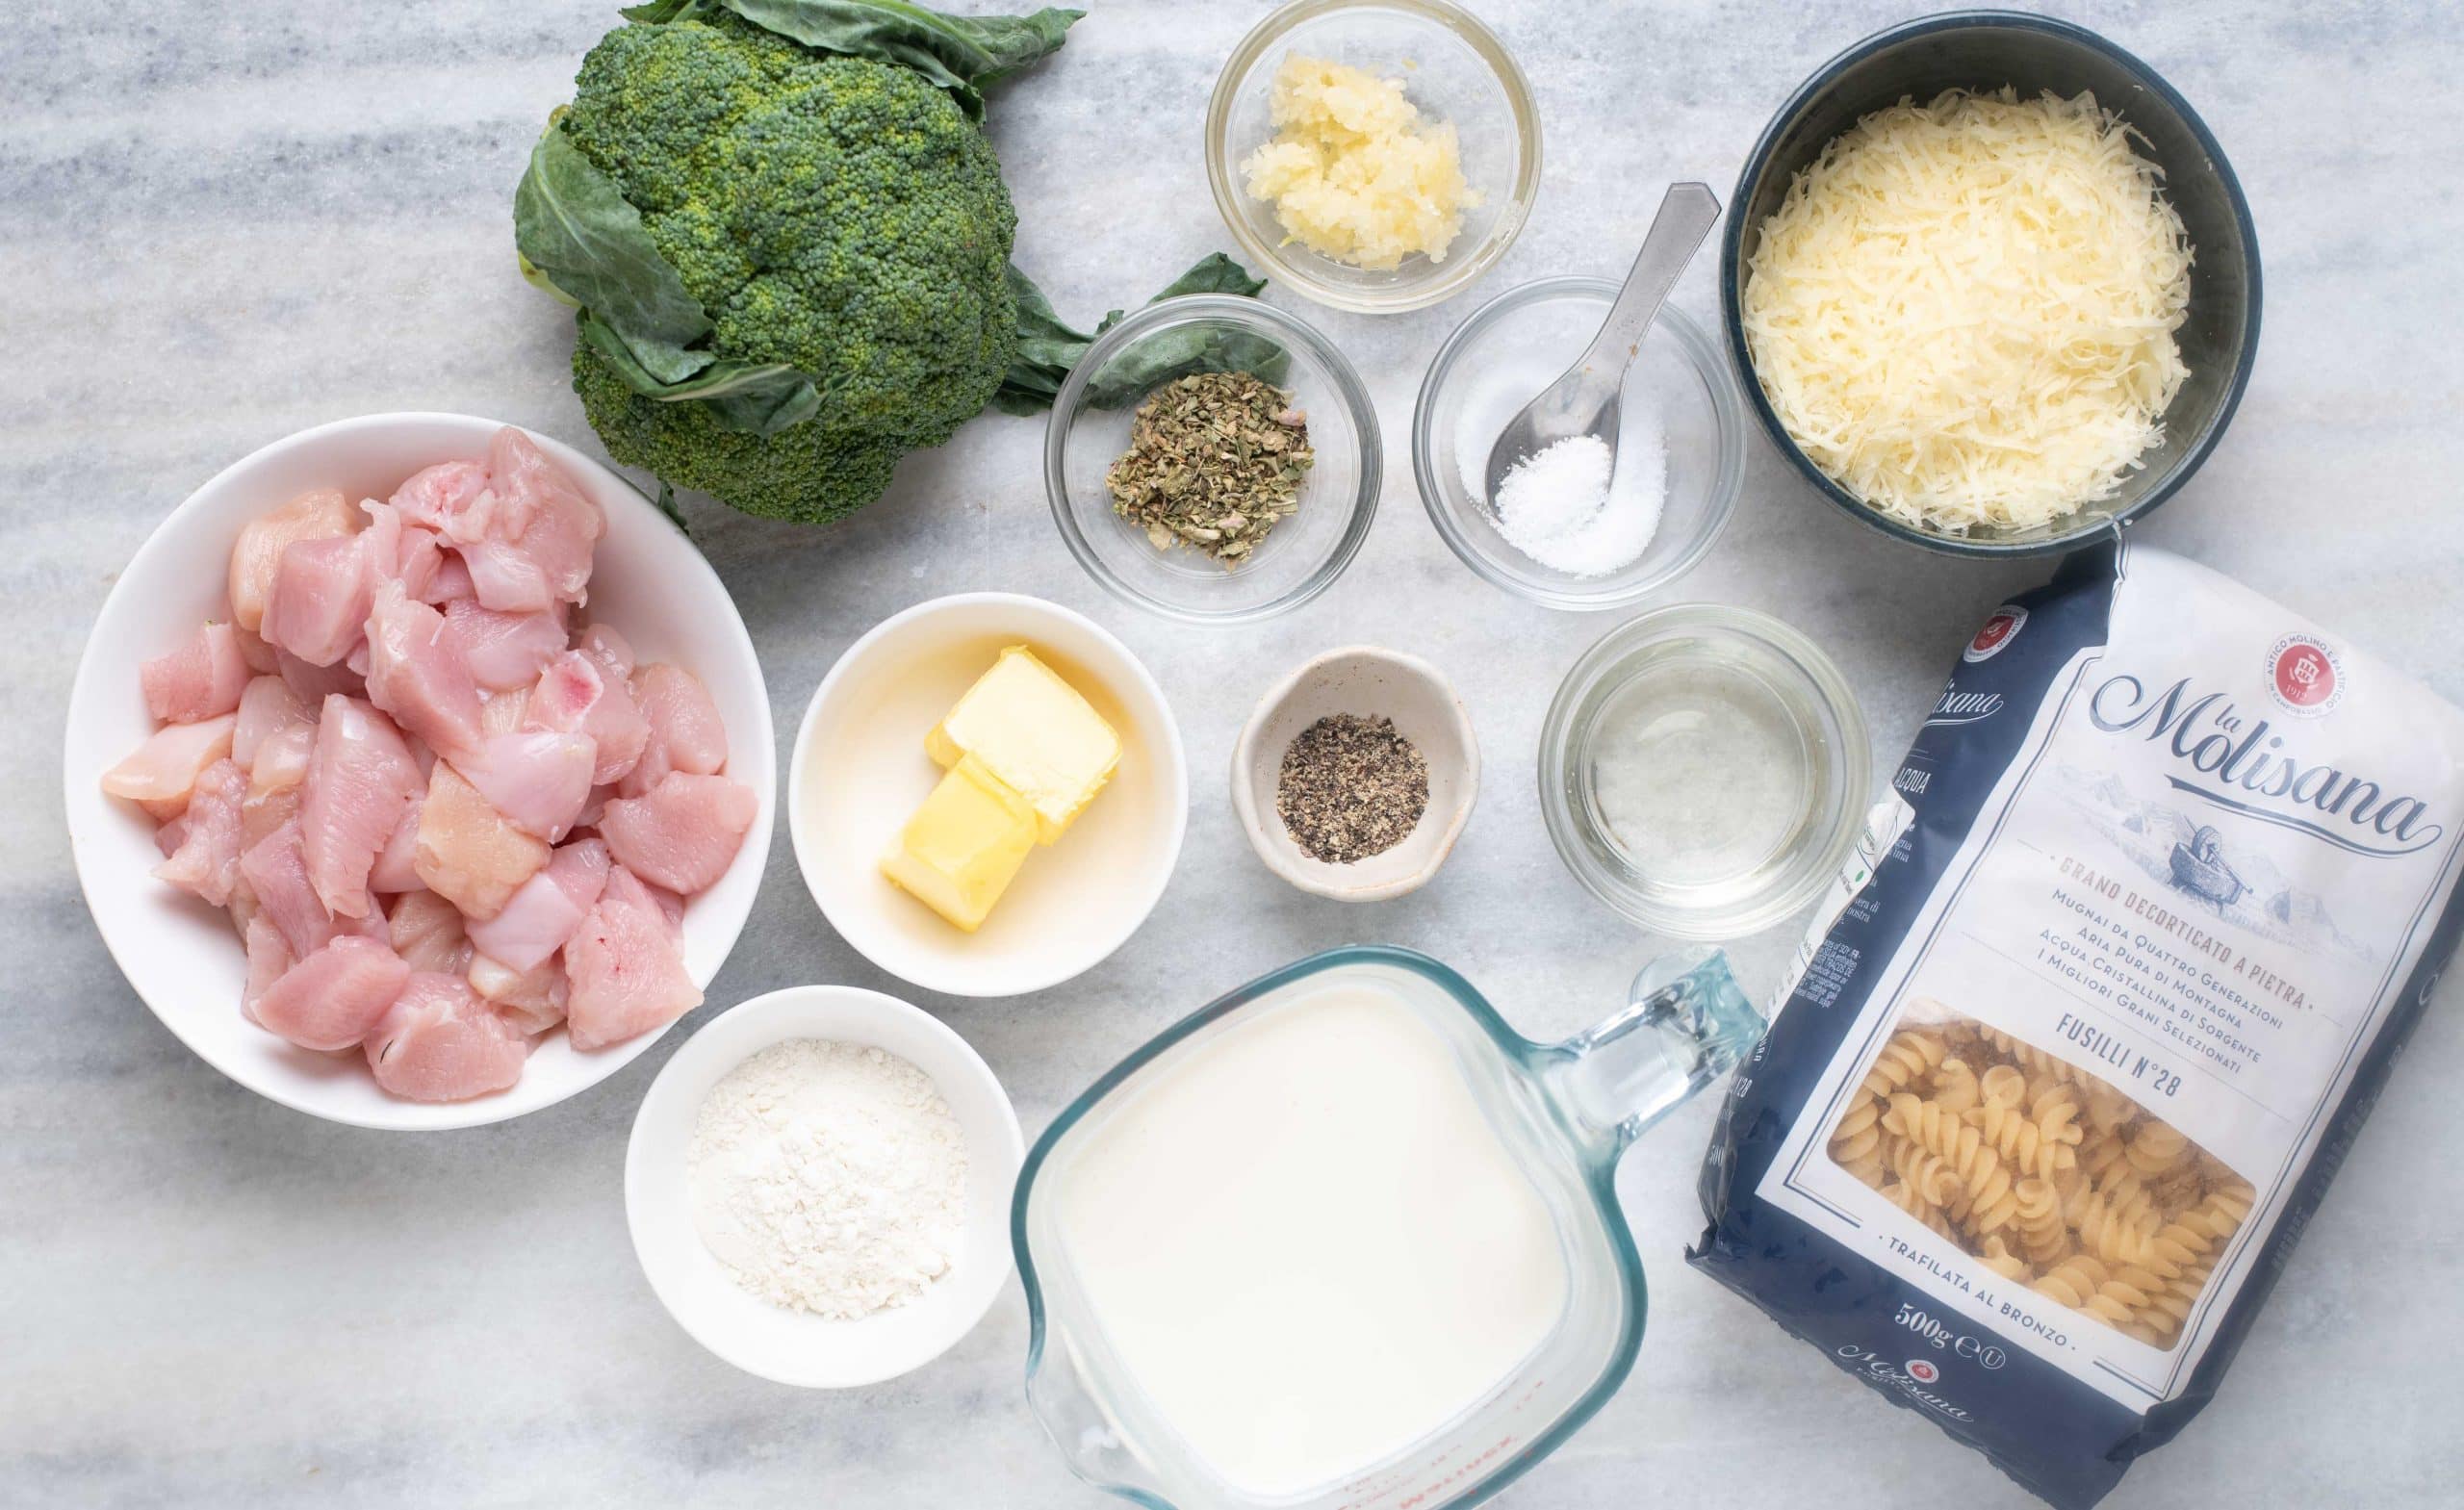 Ingredients for Chicken broccoli Pasta